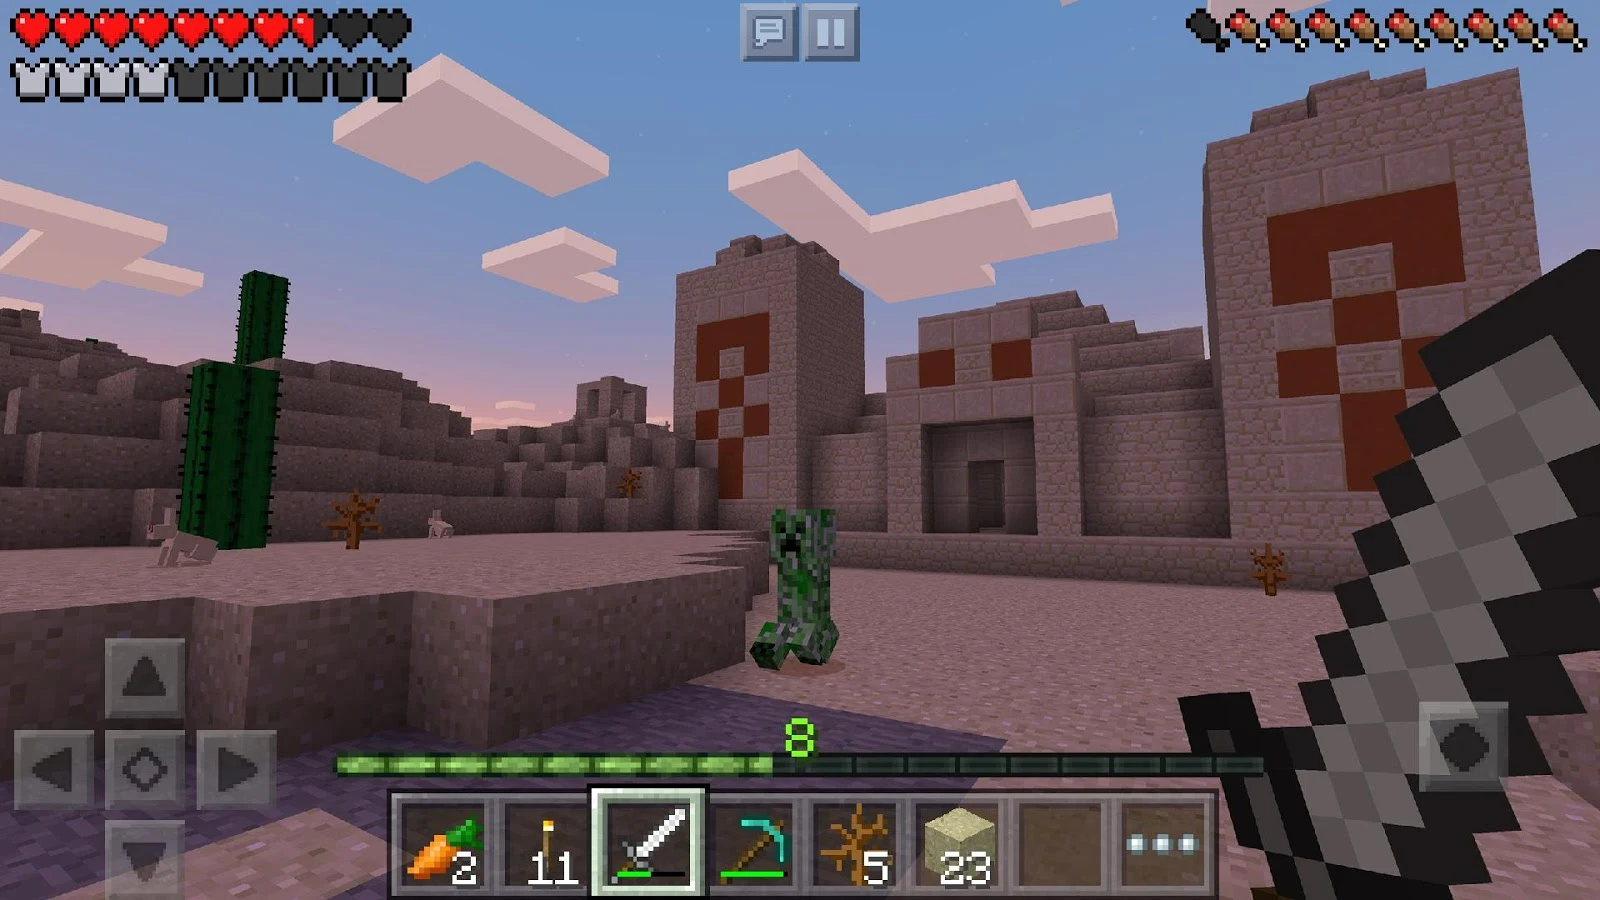   Minecraft - Pocket Edition: screenshot 